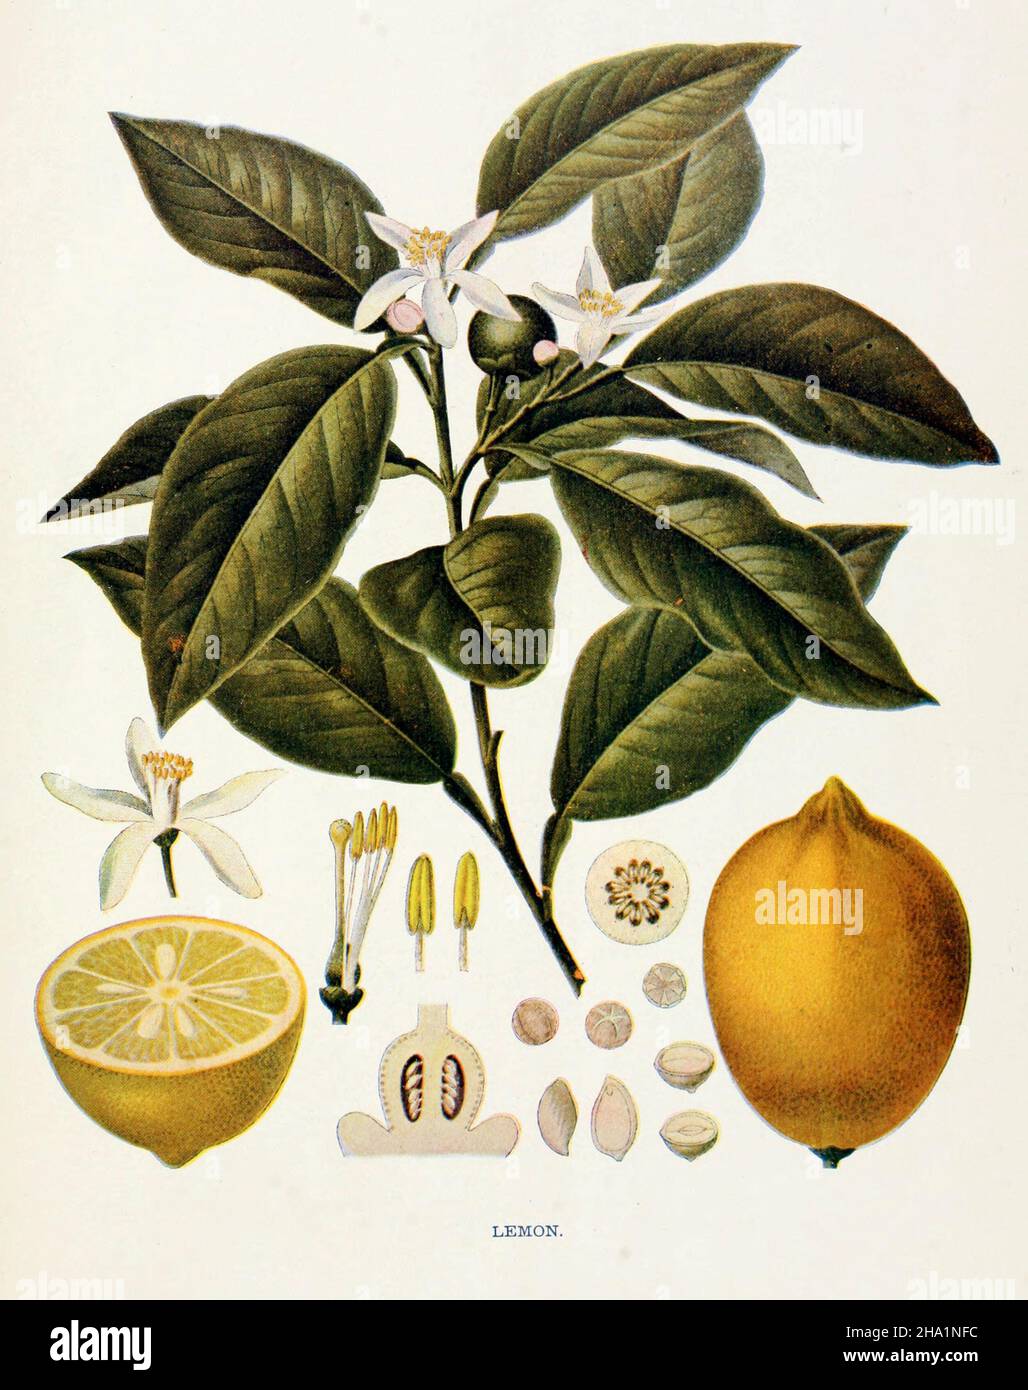 Illustration of Lemon, Cut Lemon, and Lemon tree Stock Photo